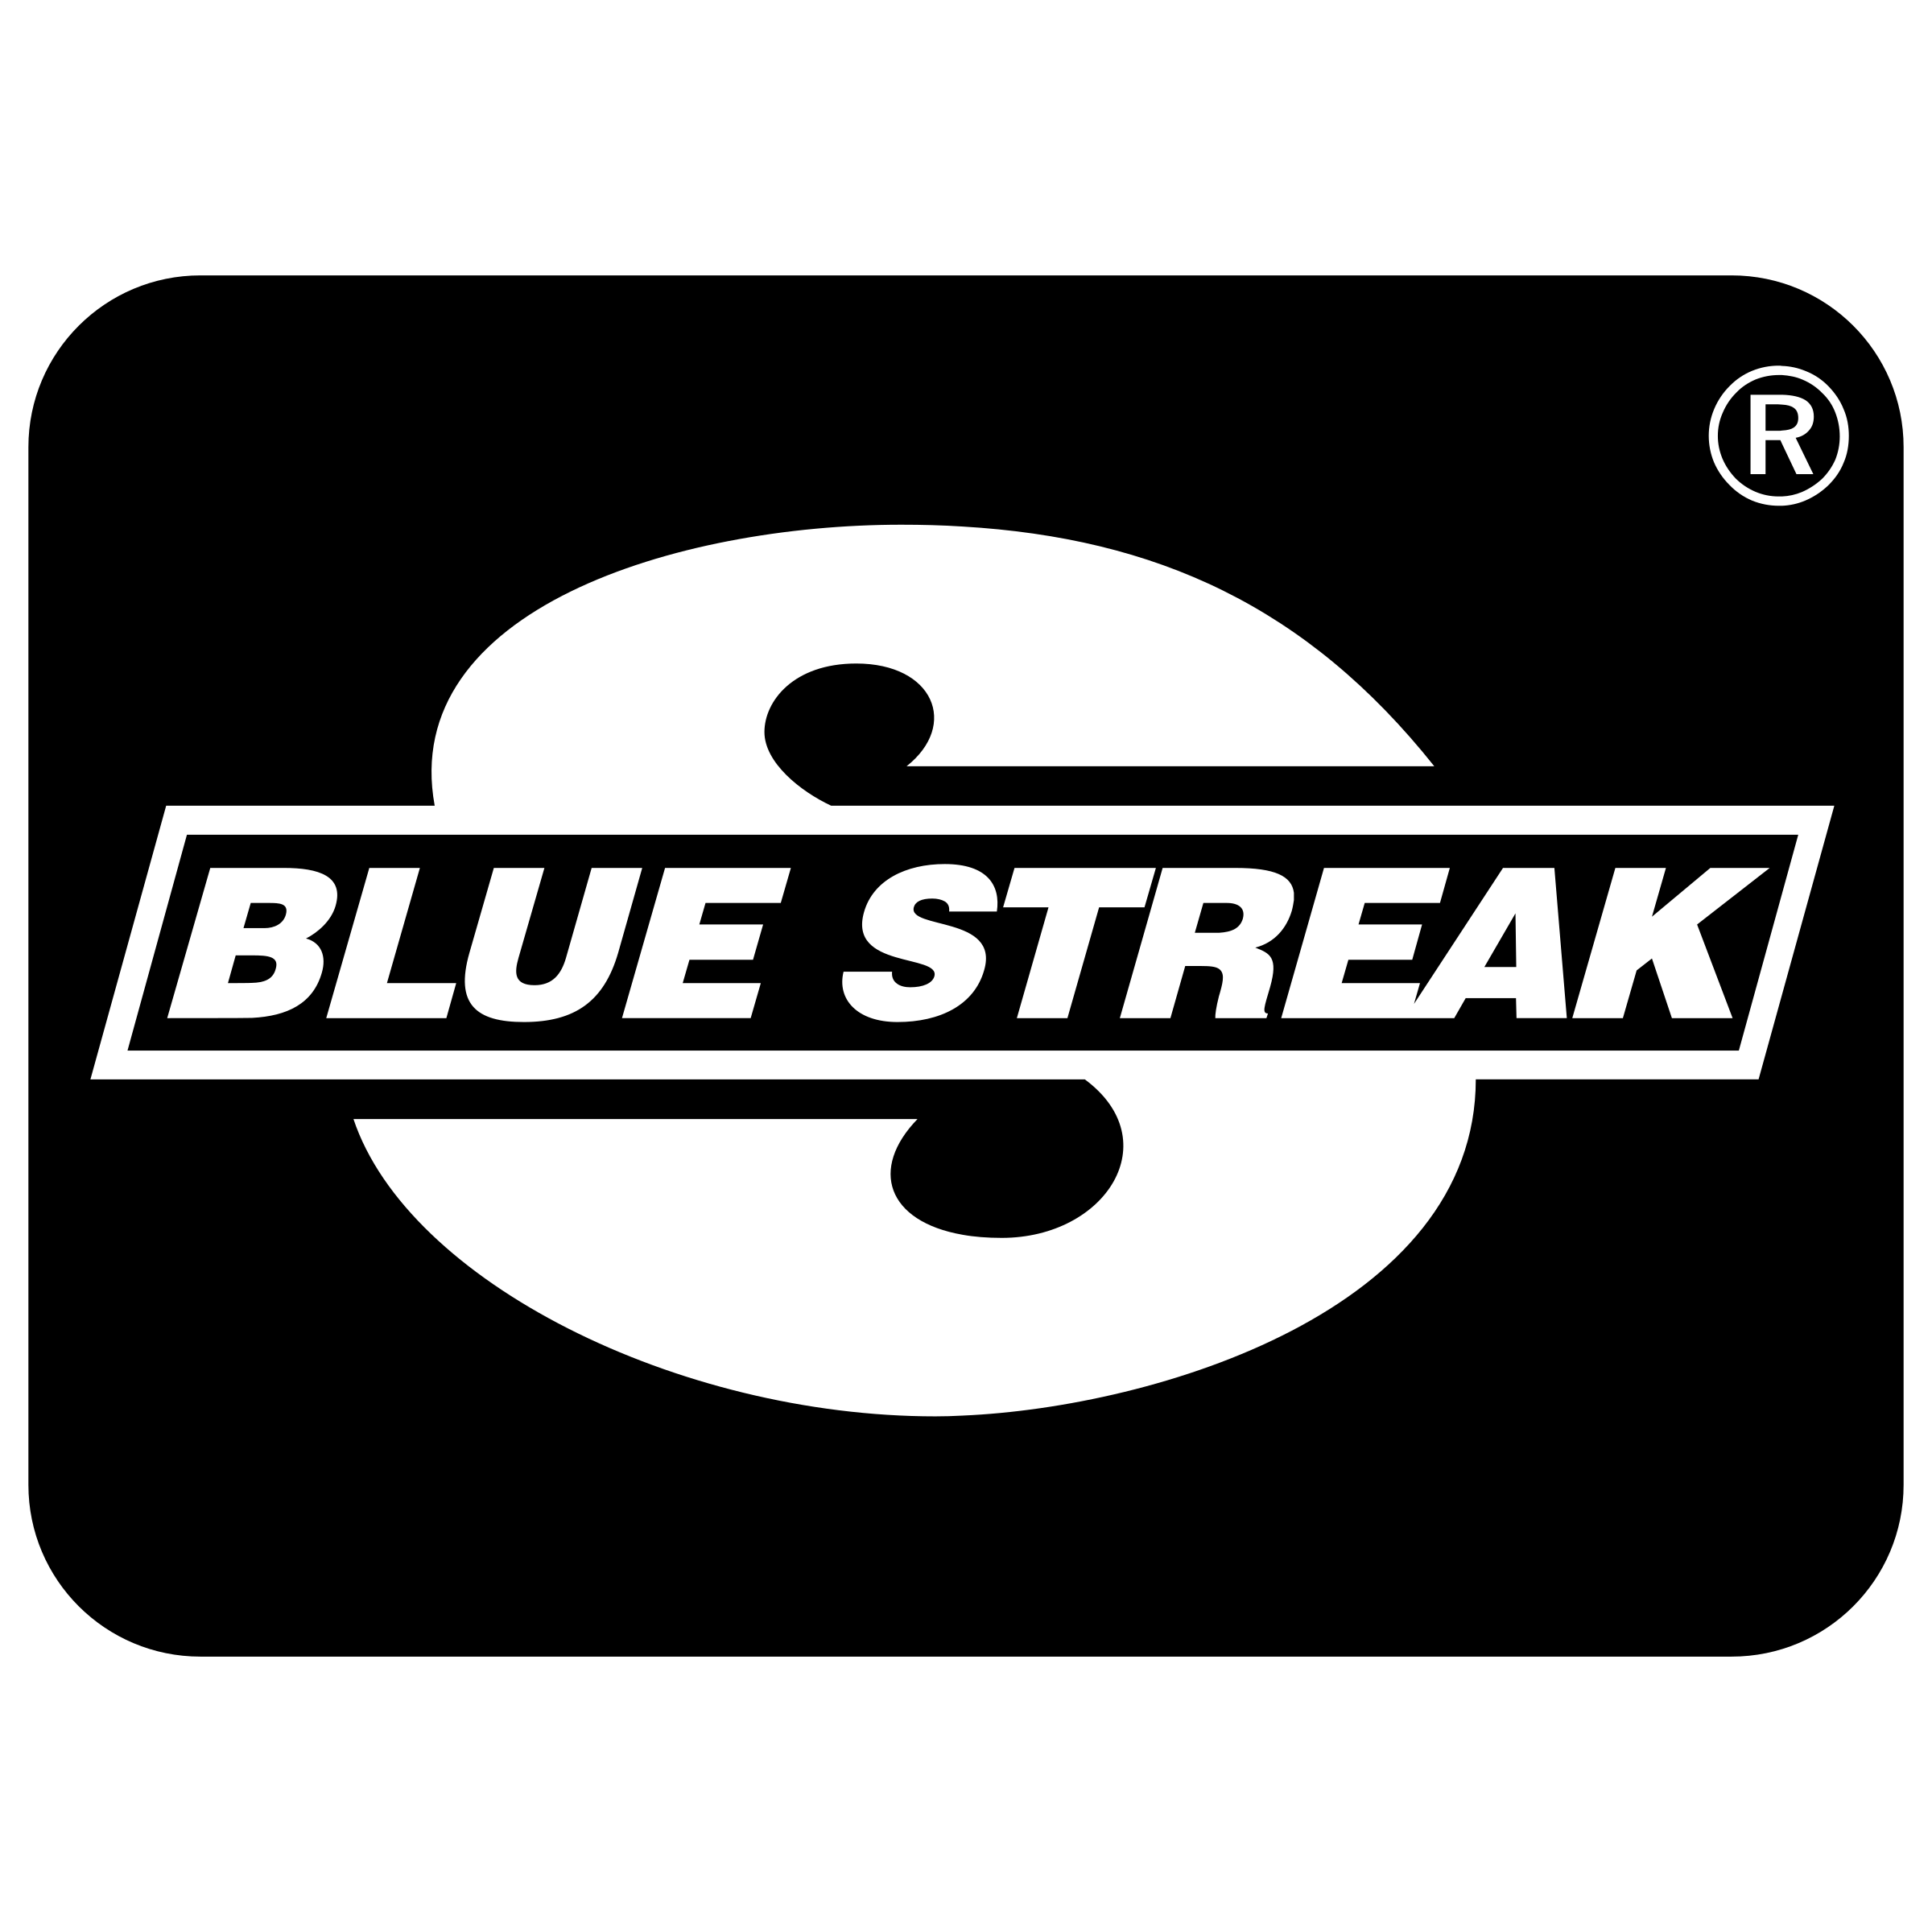 Bluestreak Logo - Blue Streak Logo PNG Transparent & SVG Vector - Freebie Supply